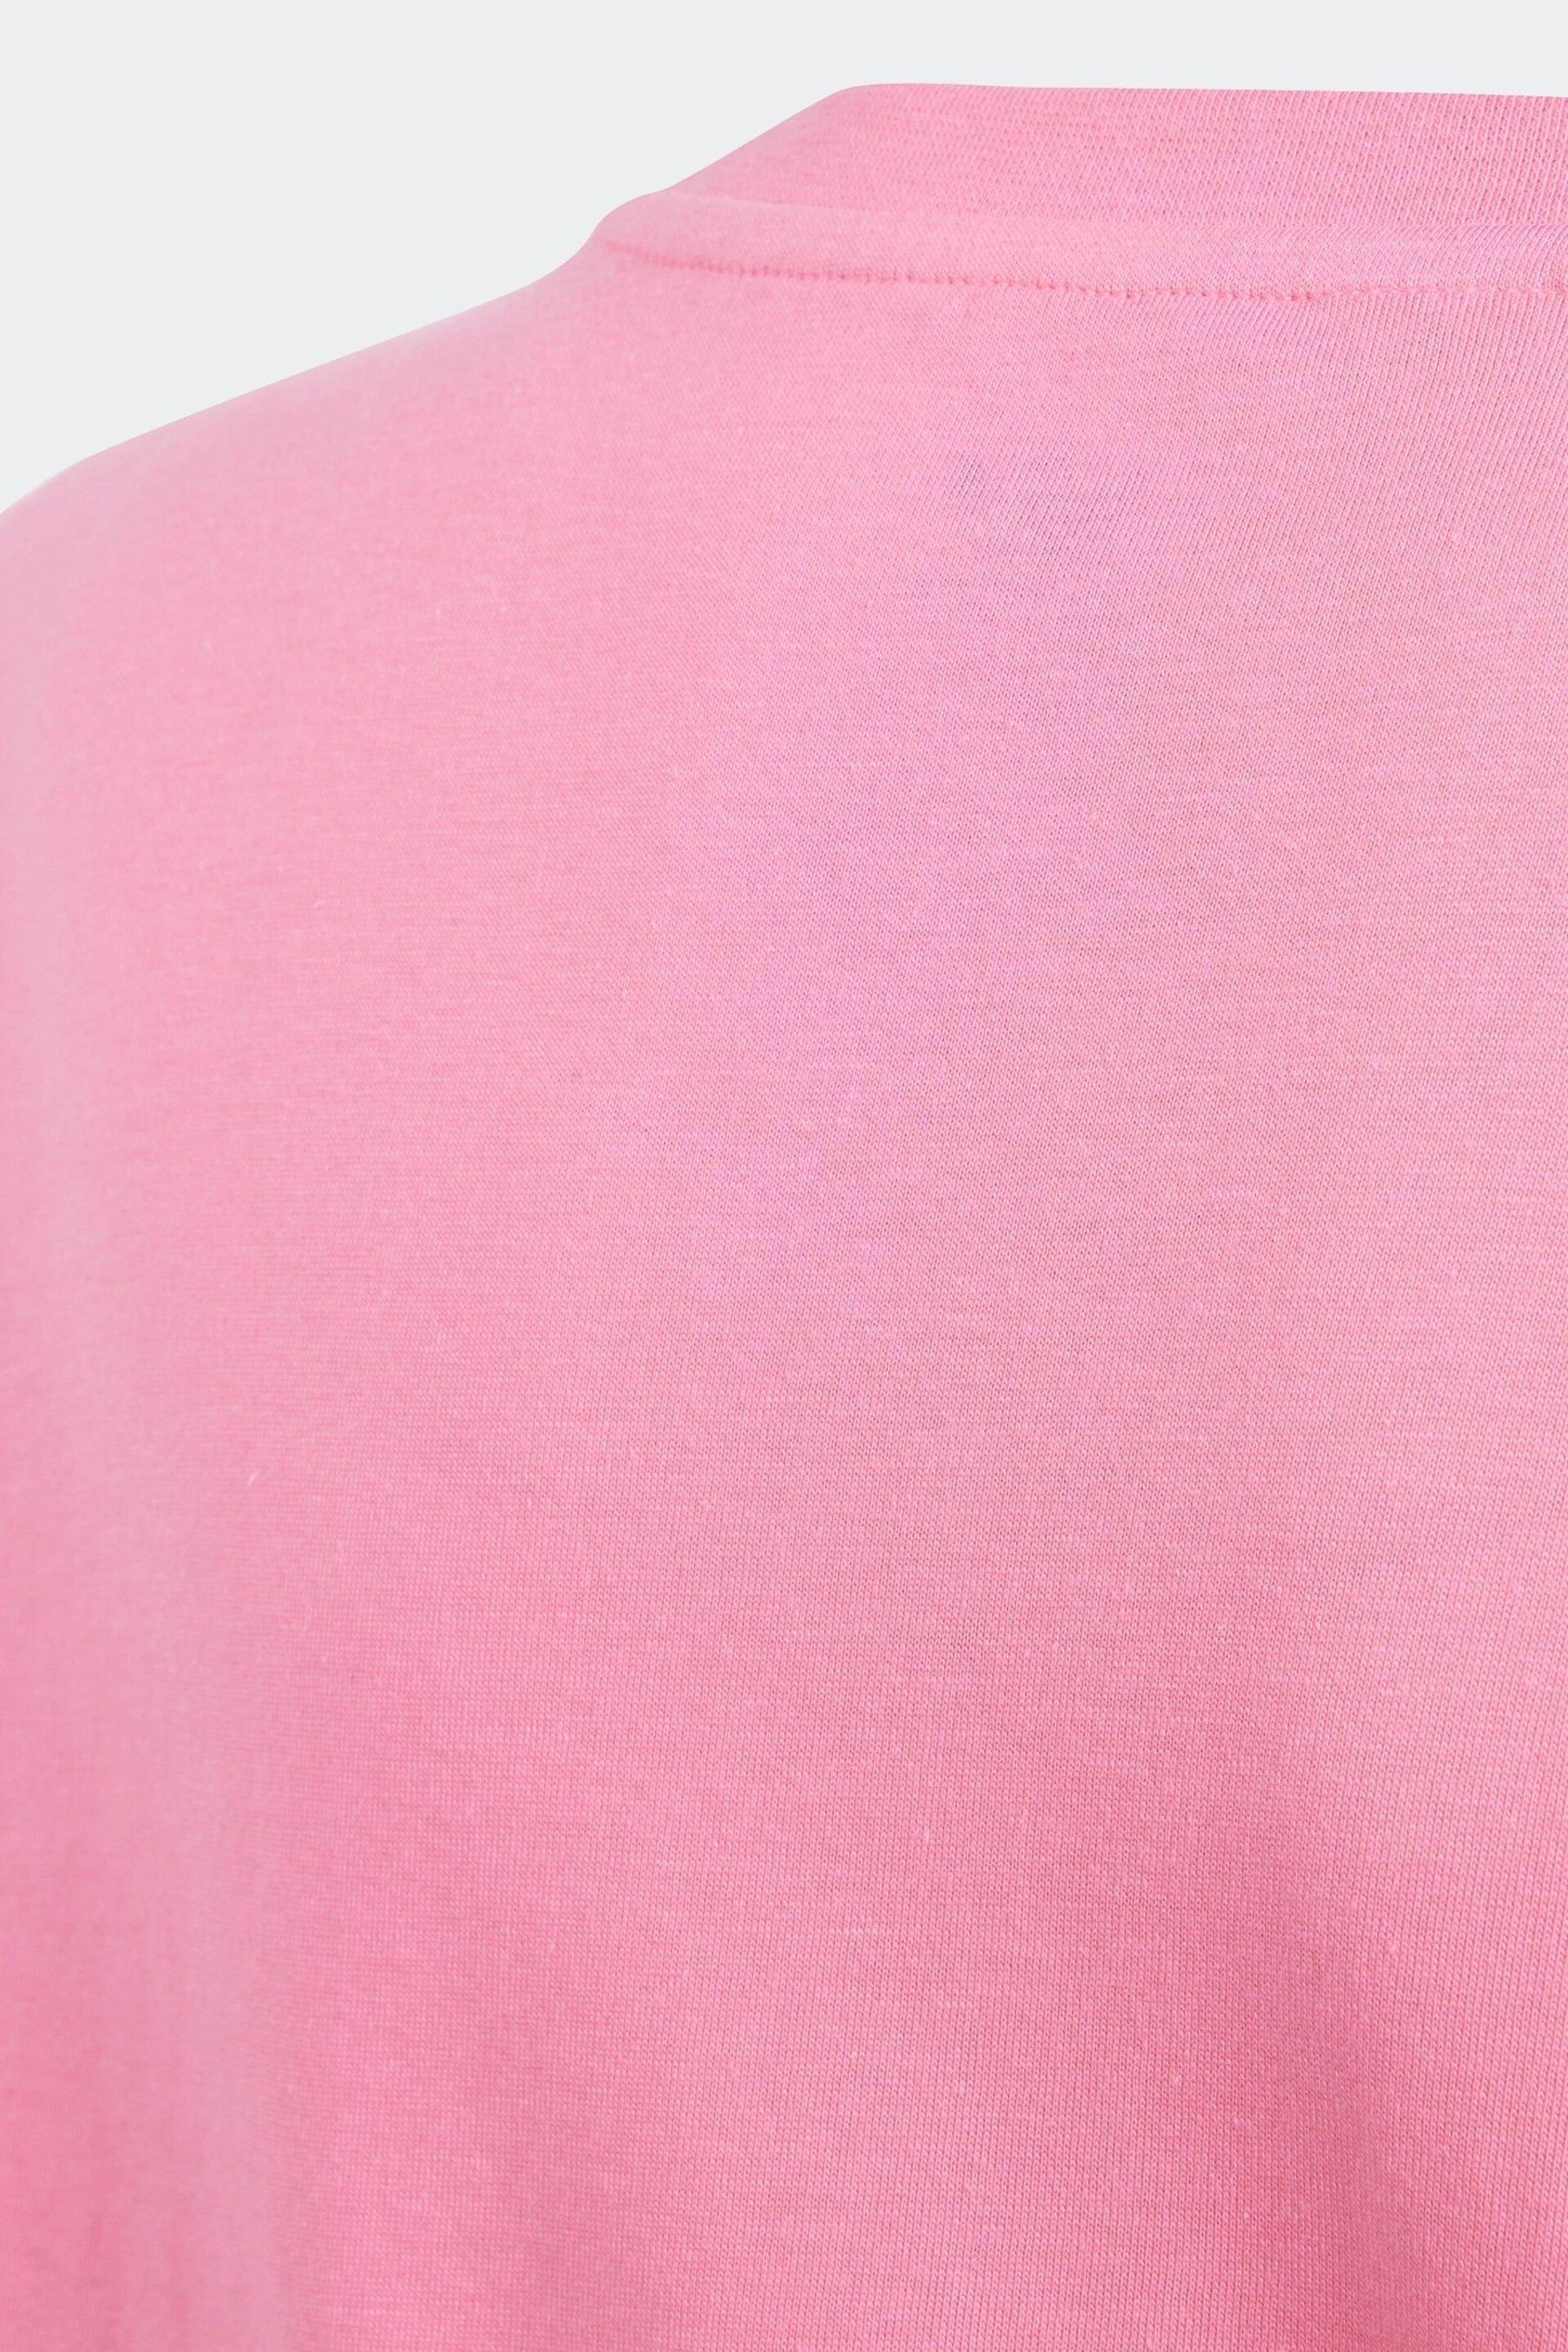 adidas Originals Pink Trefoil T-Shirt - Image 5 of 5